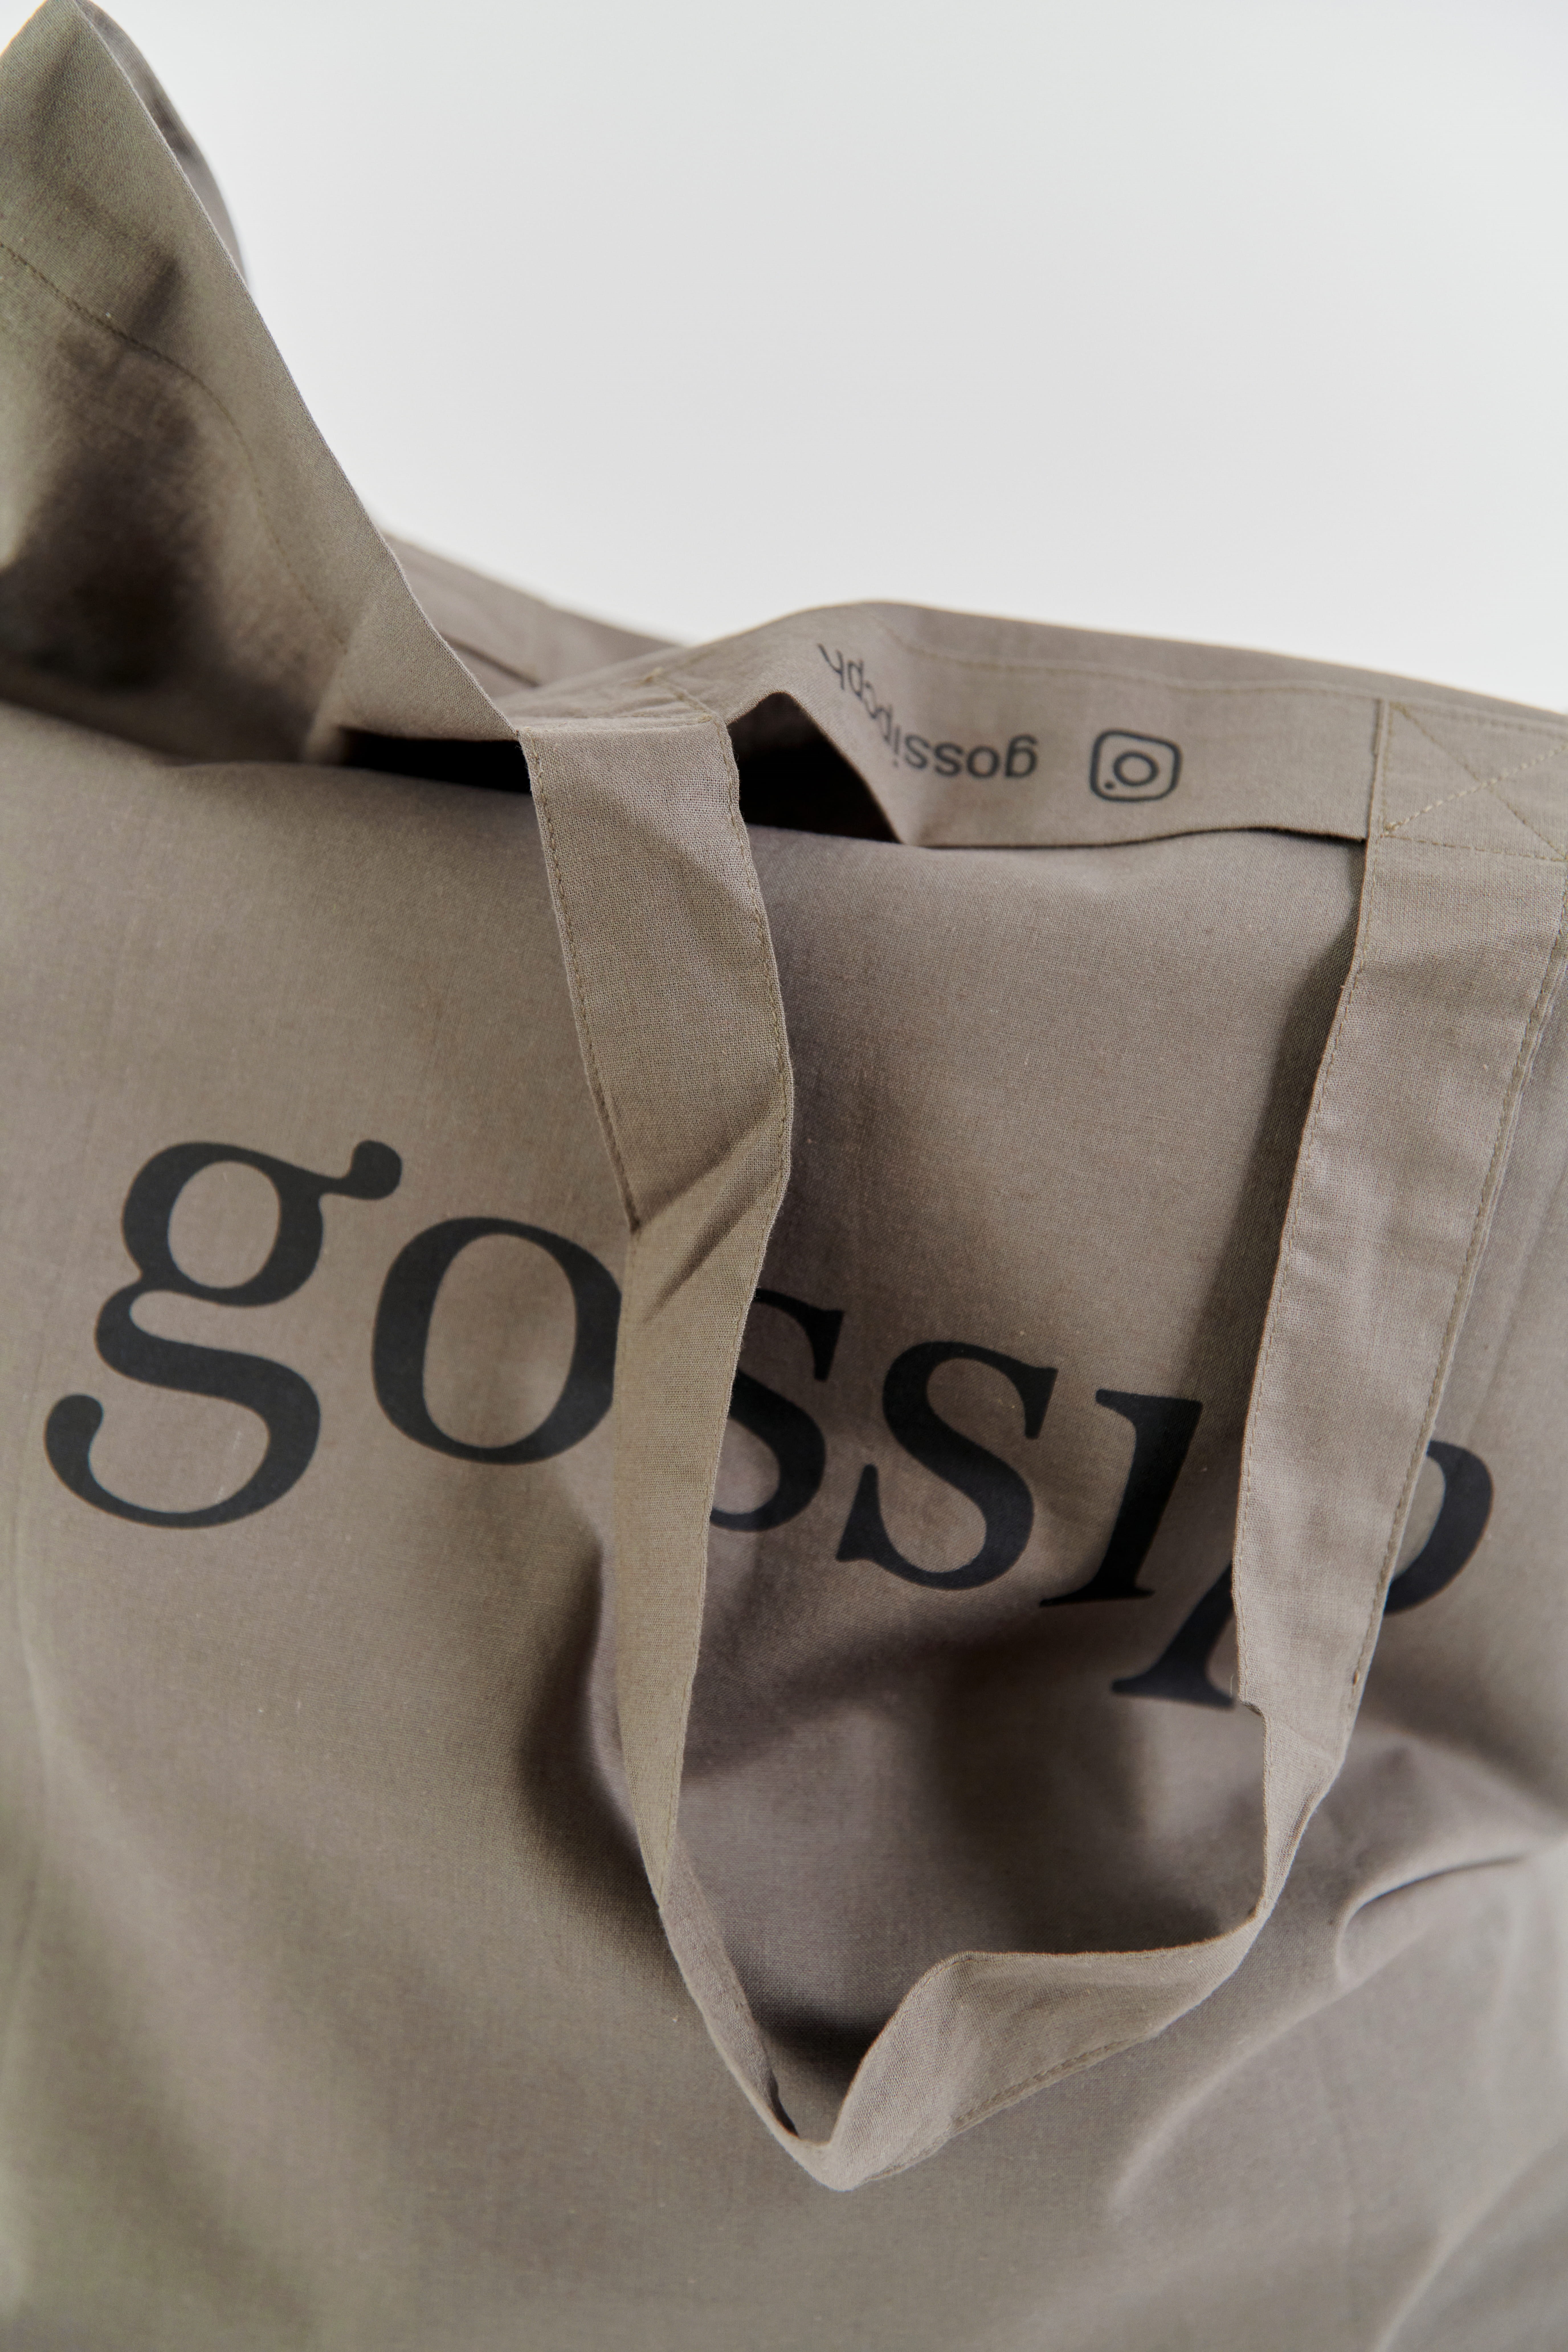 Gossip Cotton bag